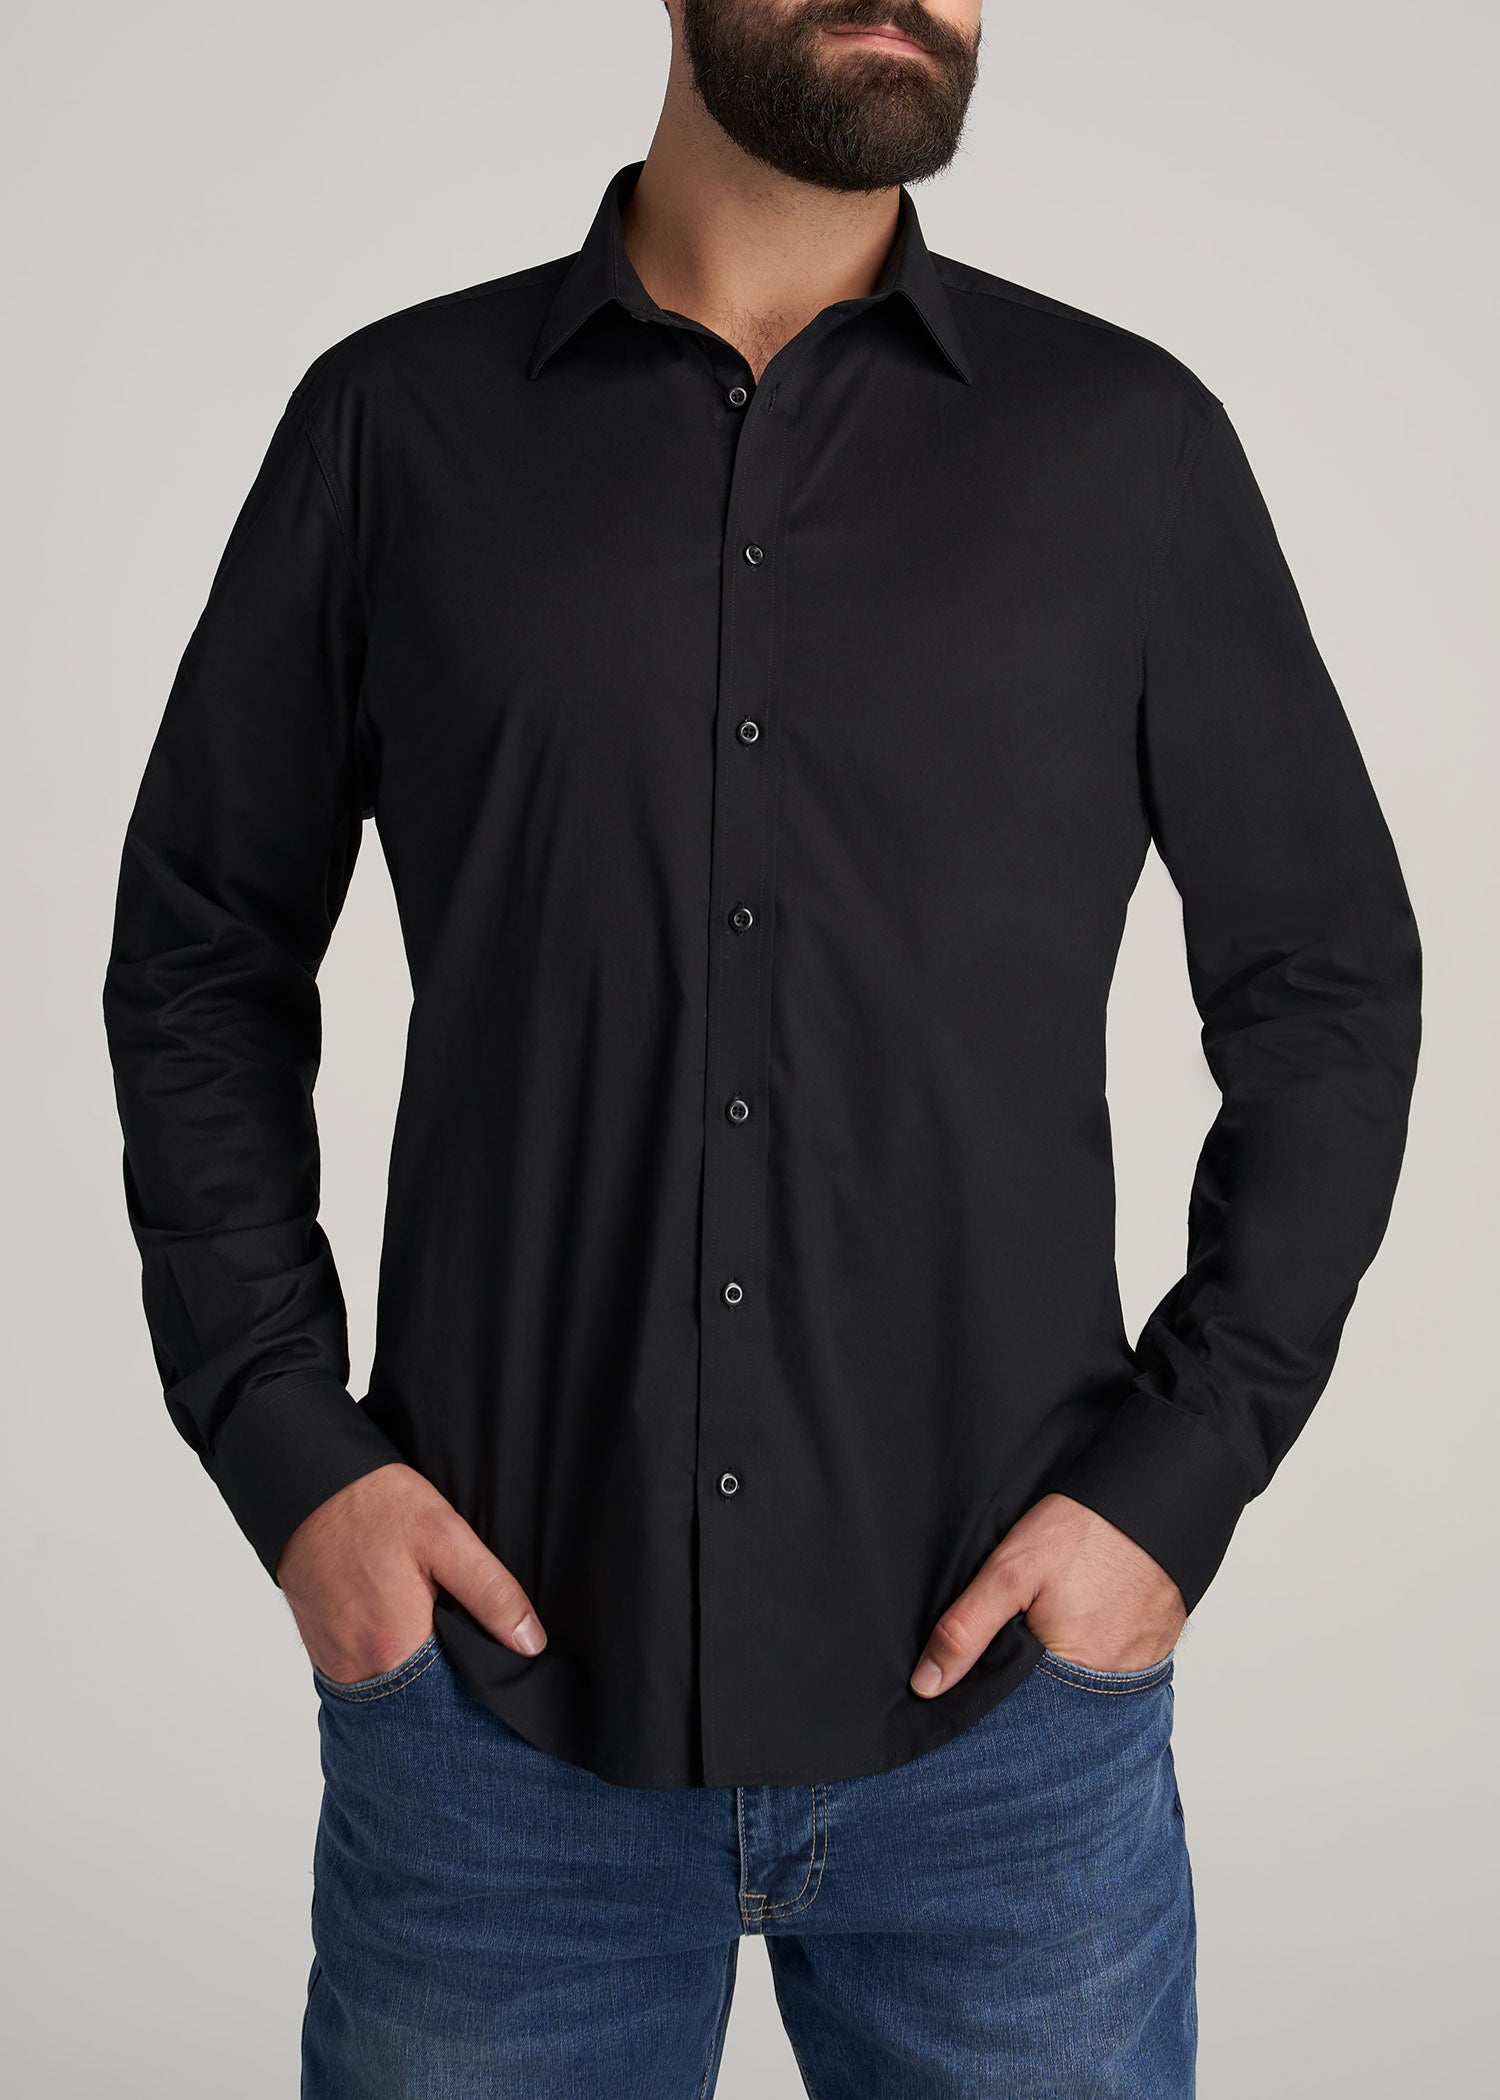 Men's Button-Down Front Shirts